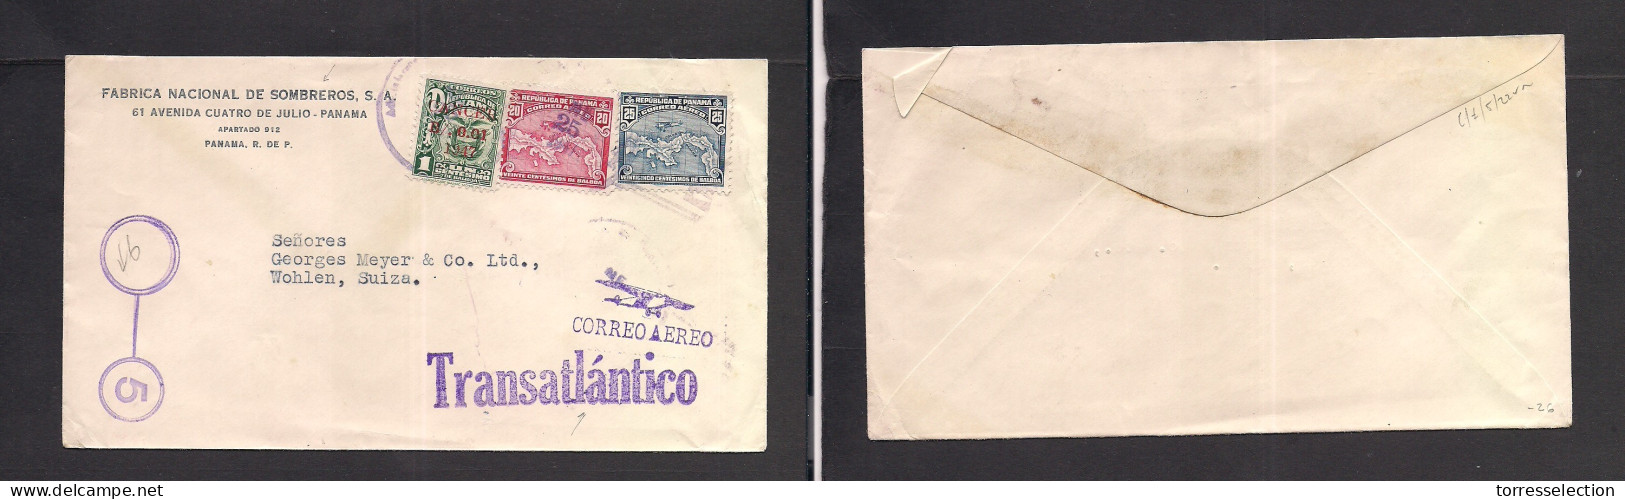 PANAMA. 1947 (25 June) GPO - Switzerland, Wohlen. Air Transatlantico Special Cachet. Multifkd Envelope. XSALE. - Panama